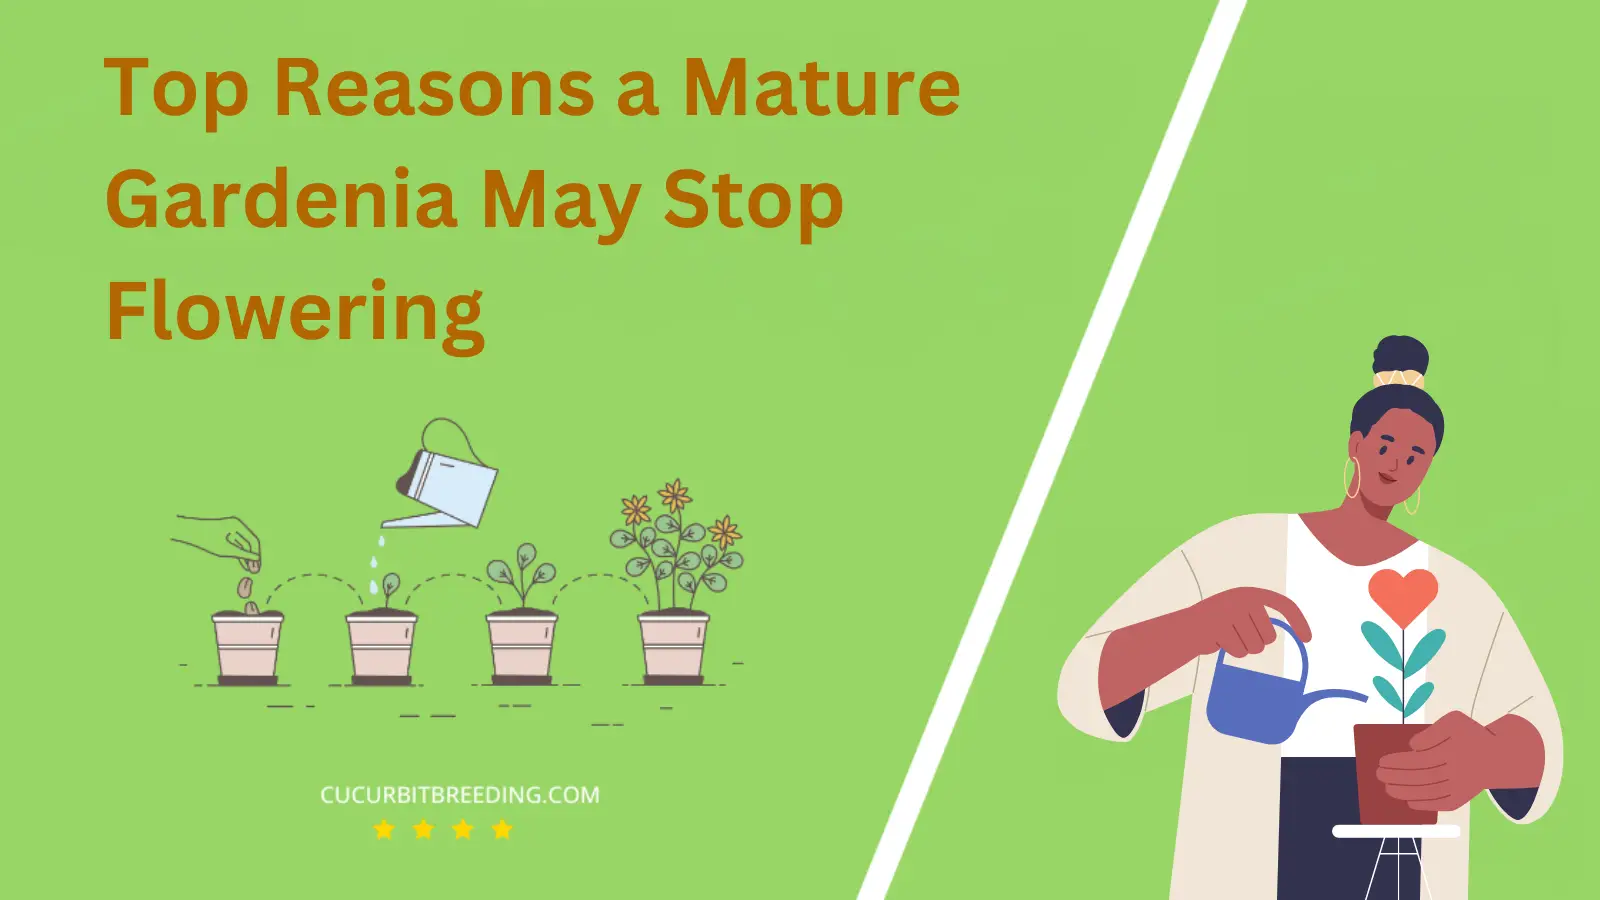 Top Reasons a Mature Gardenia May Stop Flowering